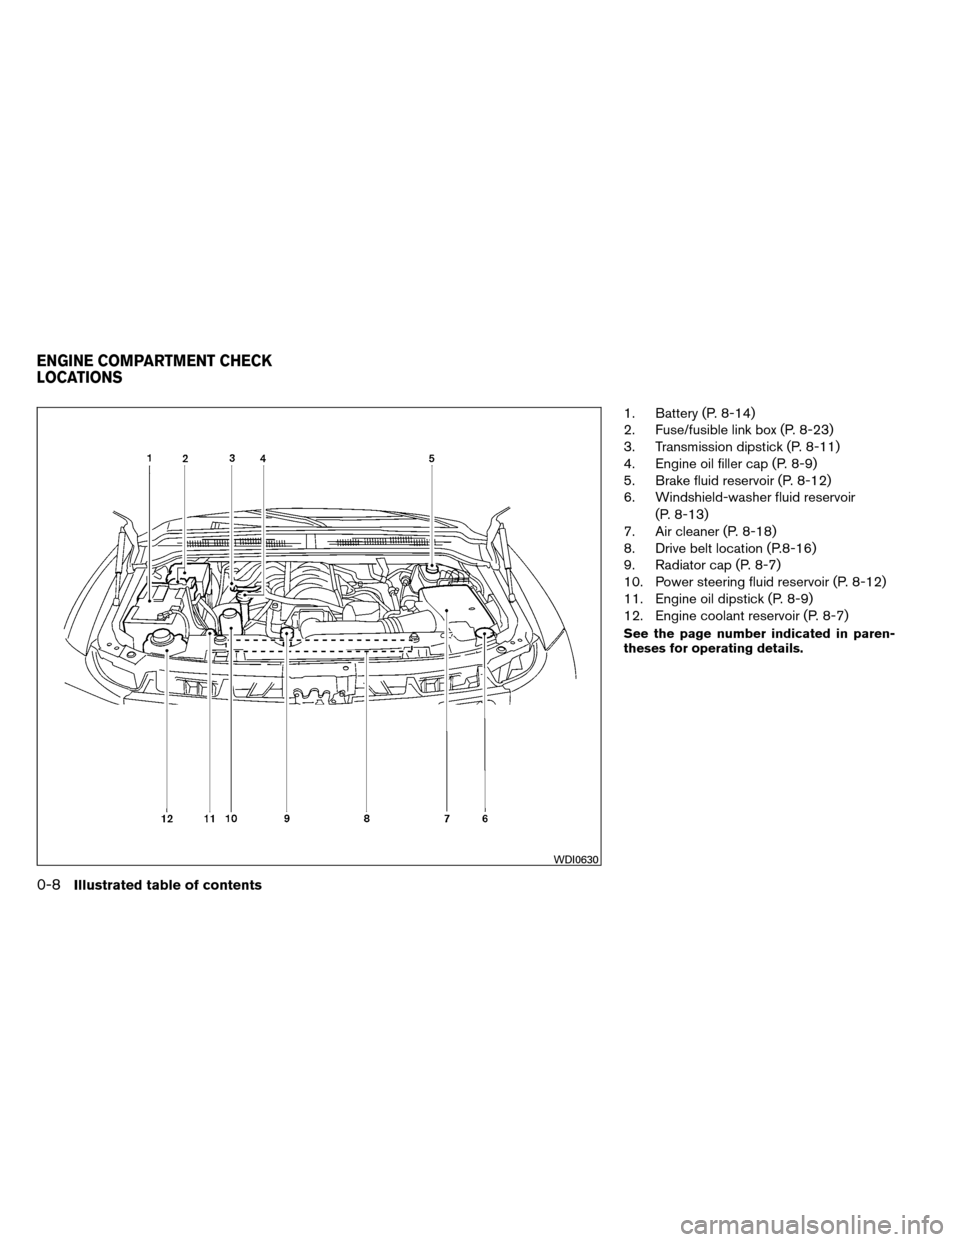 NISSAN ARMADA 2013 1.G Owners Manual 1. Battery (P. 8-14)
2. Fuse/fusible link box (P. 8-23)
3. Transmission dipstick (P. 8-11)
4. Engine oil filler cap (P. 8-9)
5. Brake fluid reservoir (P. 8-12)
6. Windshield-washer fluid reservoir(P. 